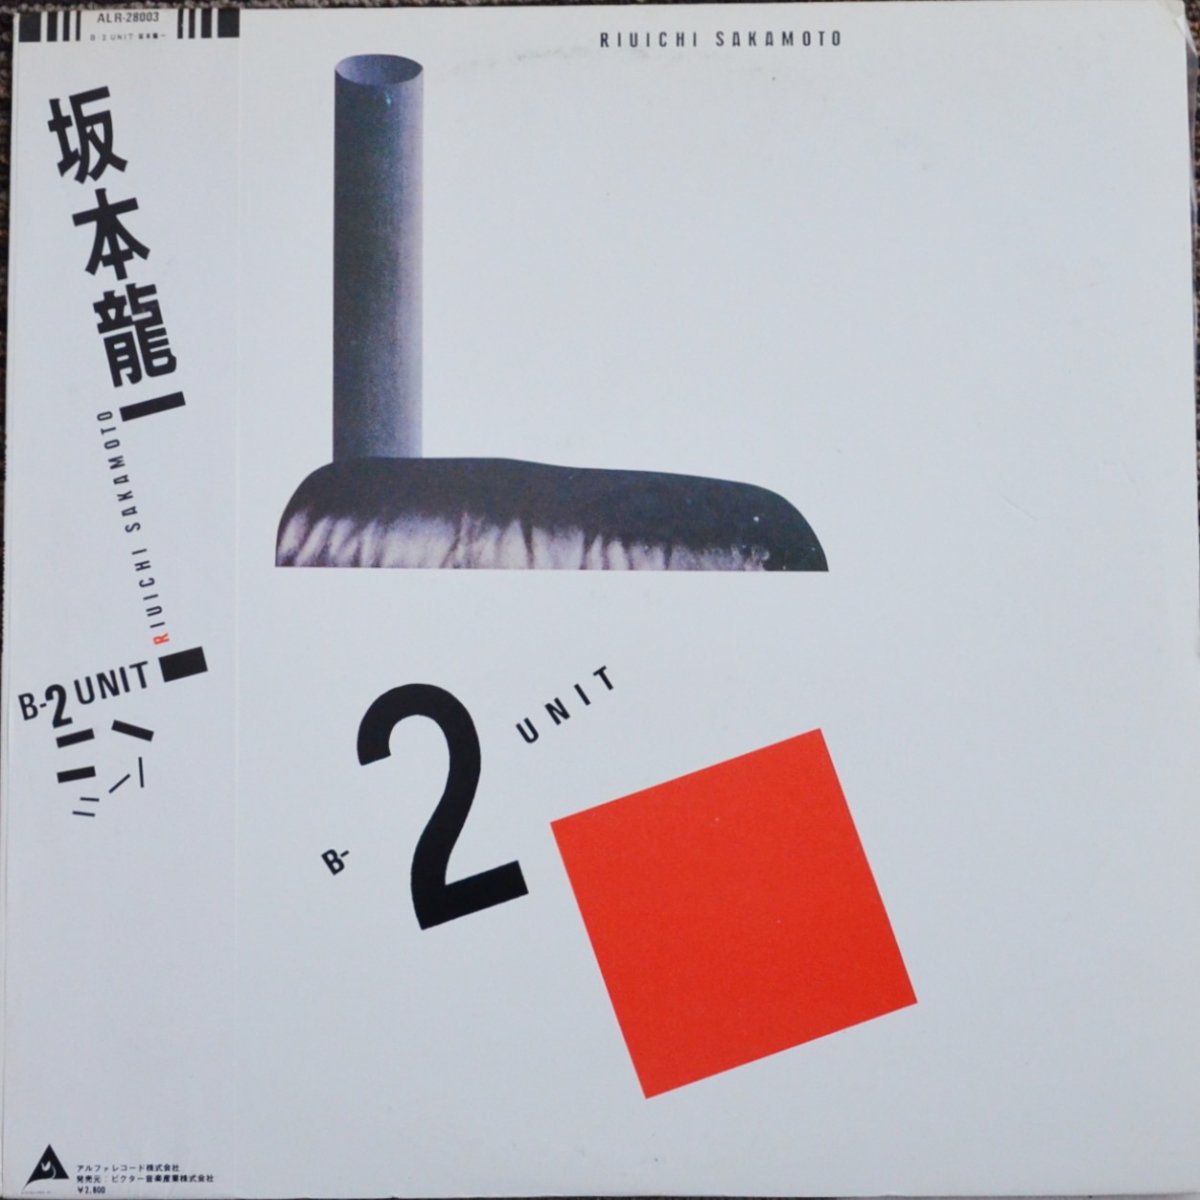 坂本龍一 RYUICHI SAKAMOTO / B-2 UNIT (LP) - HIP TANK RECORDS